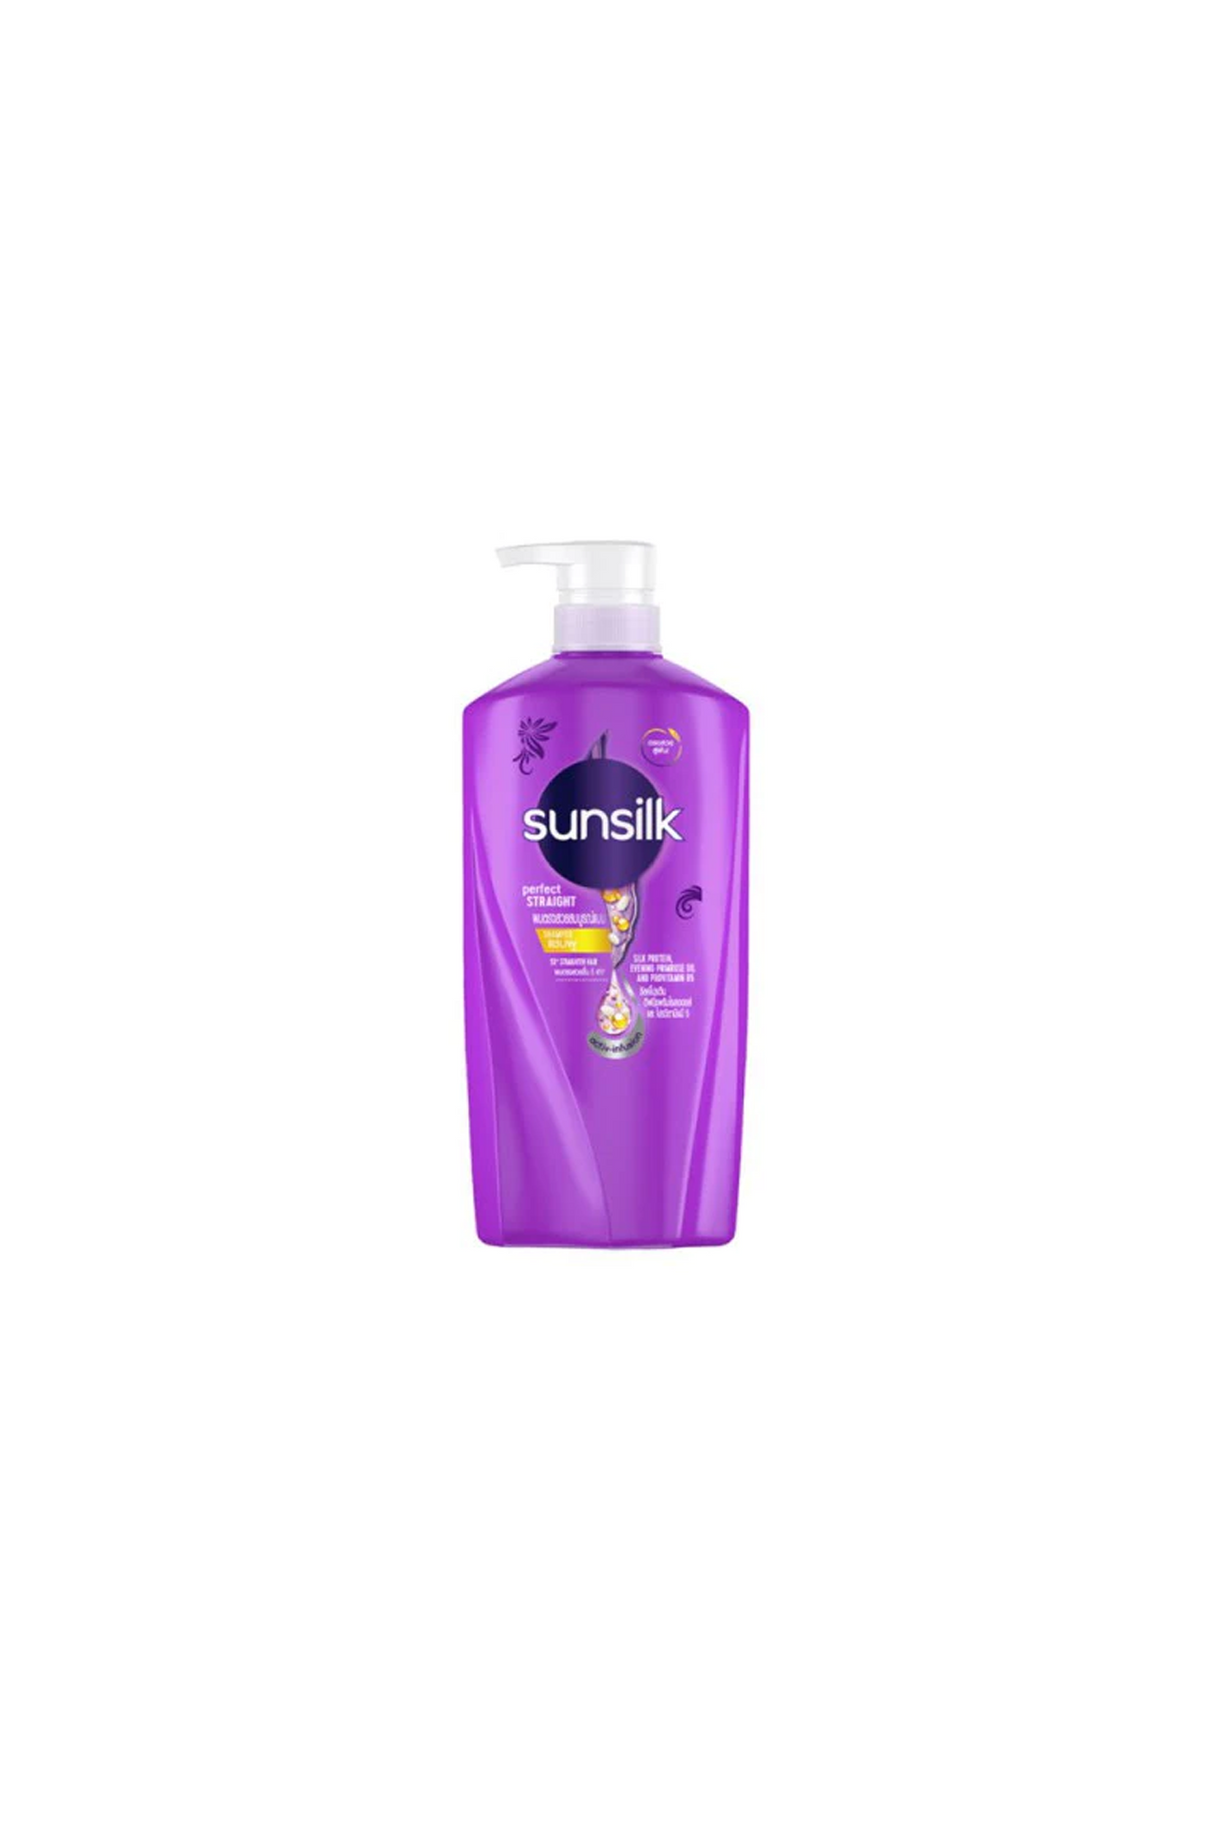 sunsilk shampoo perfect straight 560ml